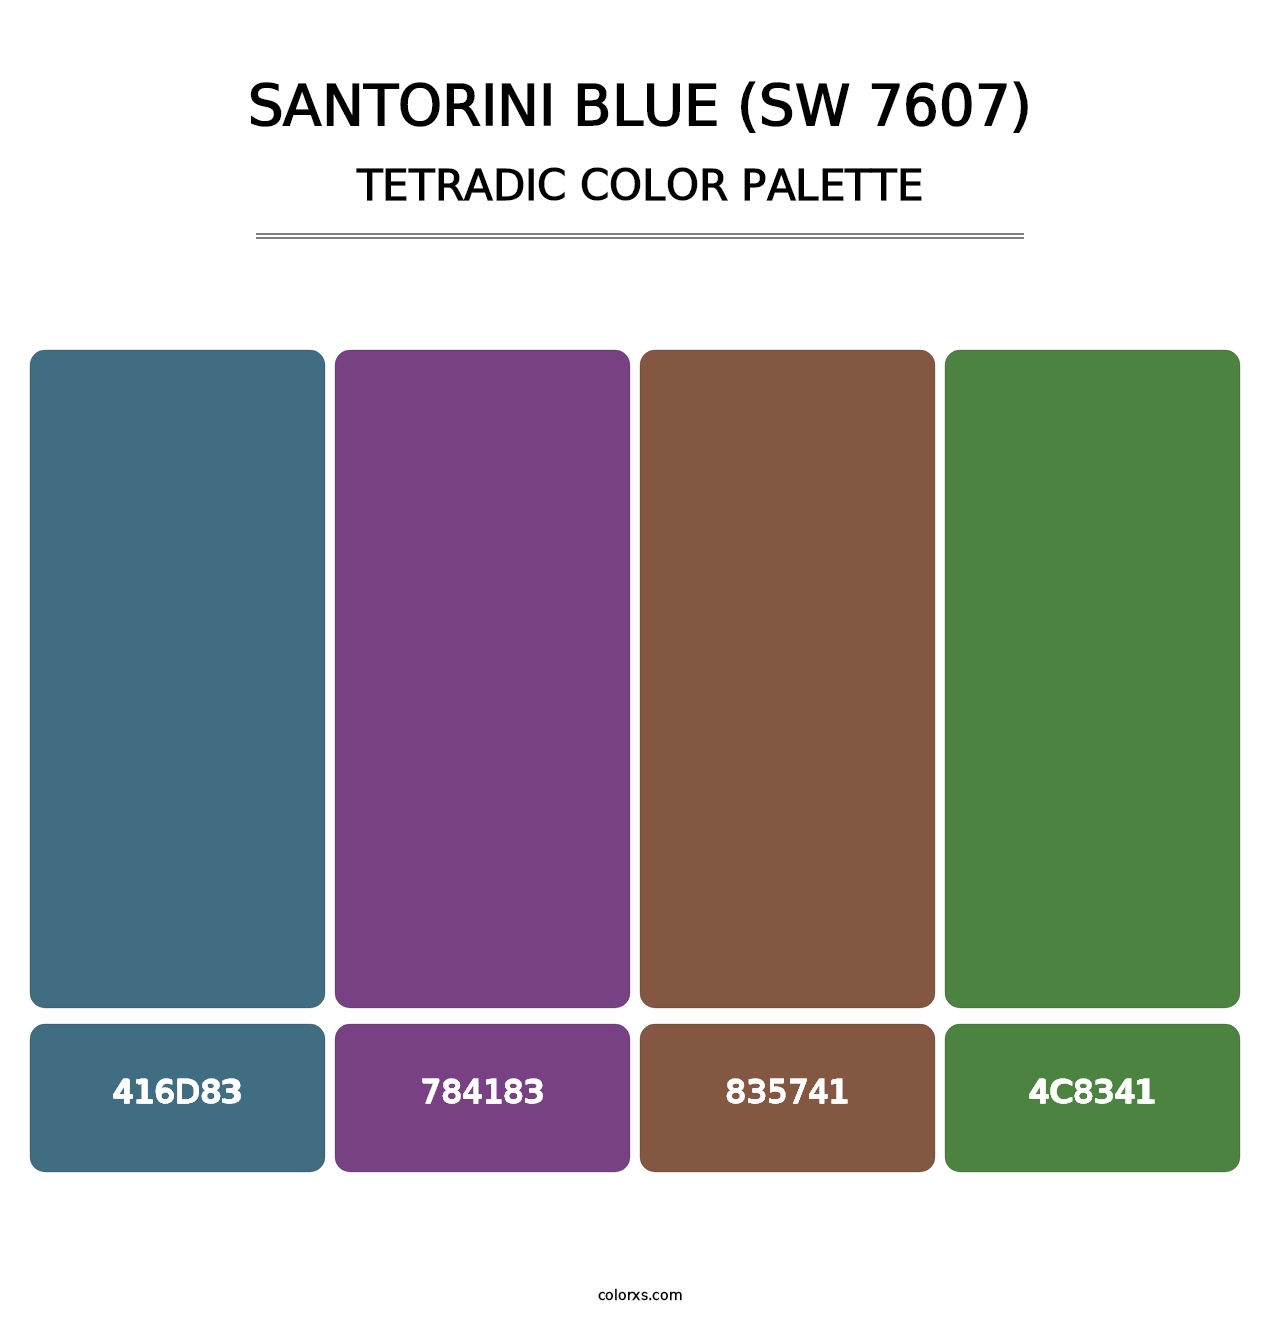 Santorini Blue (SW 7607) - Tetradic Color Palette